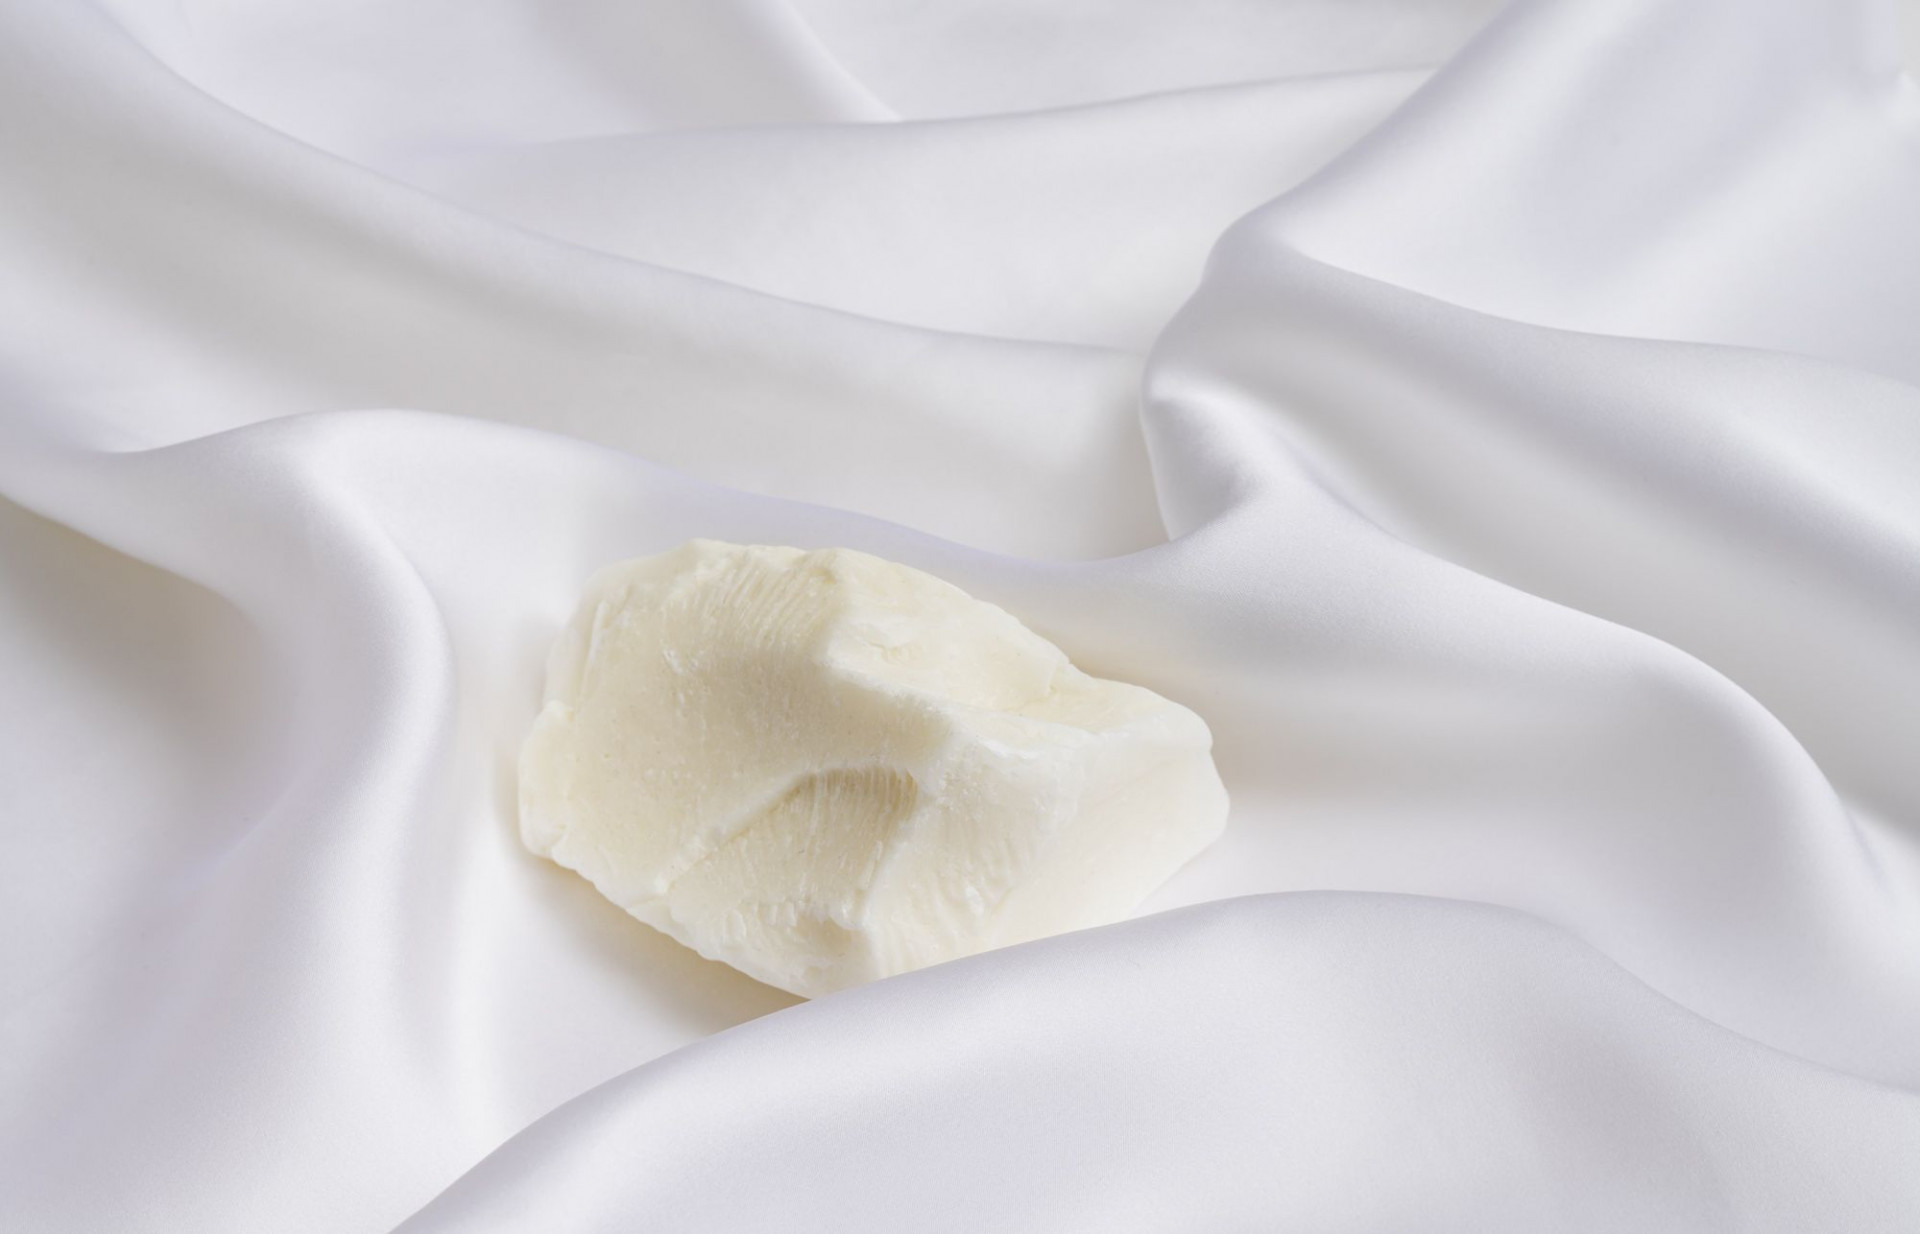 Sleeping regularly on a silk pillowcase brings many benefits.